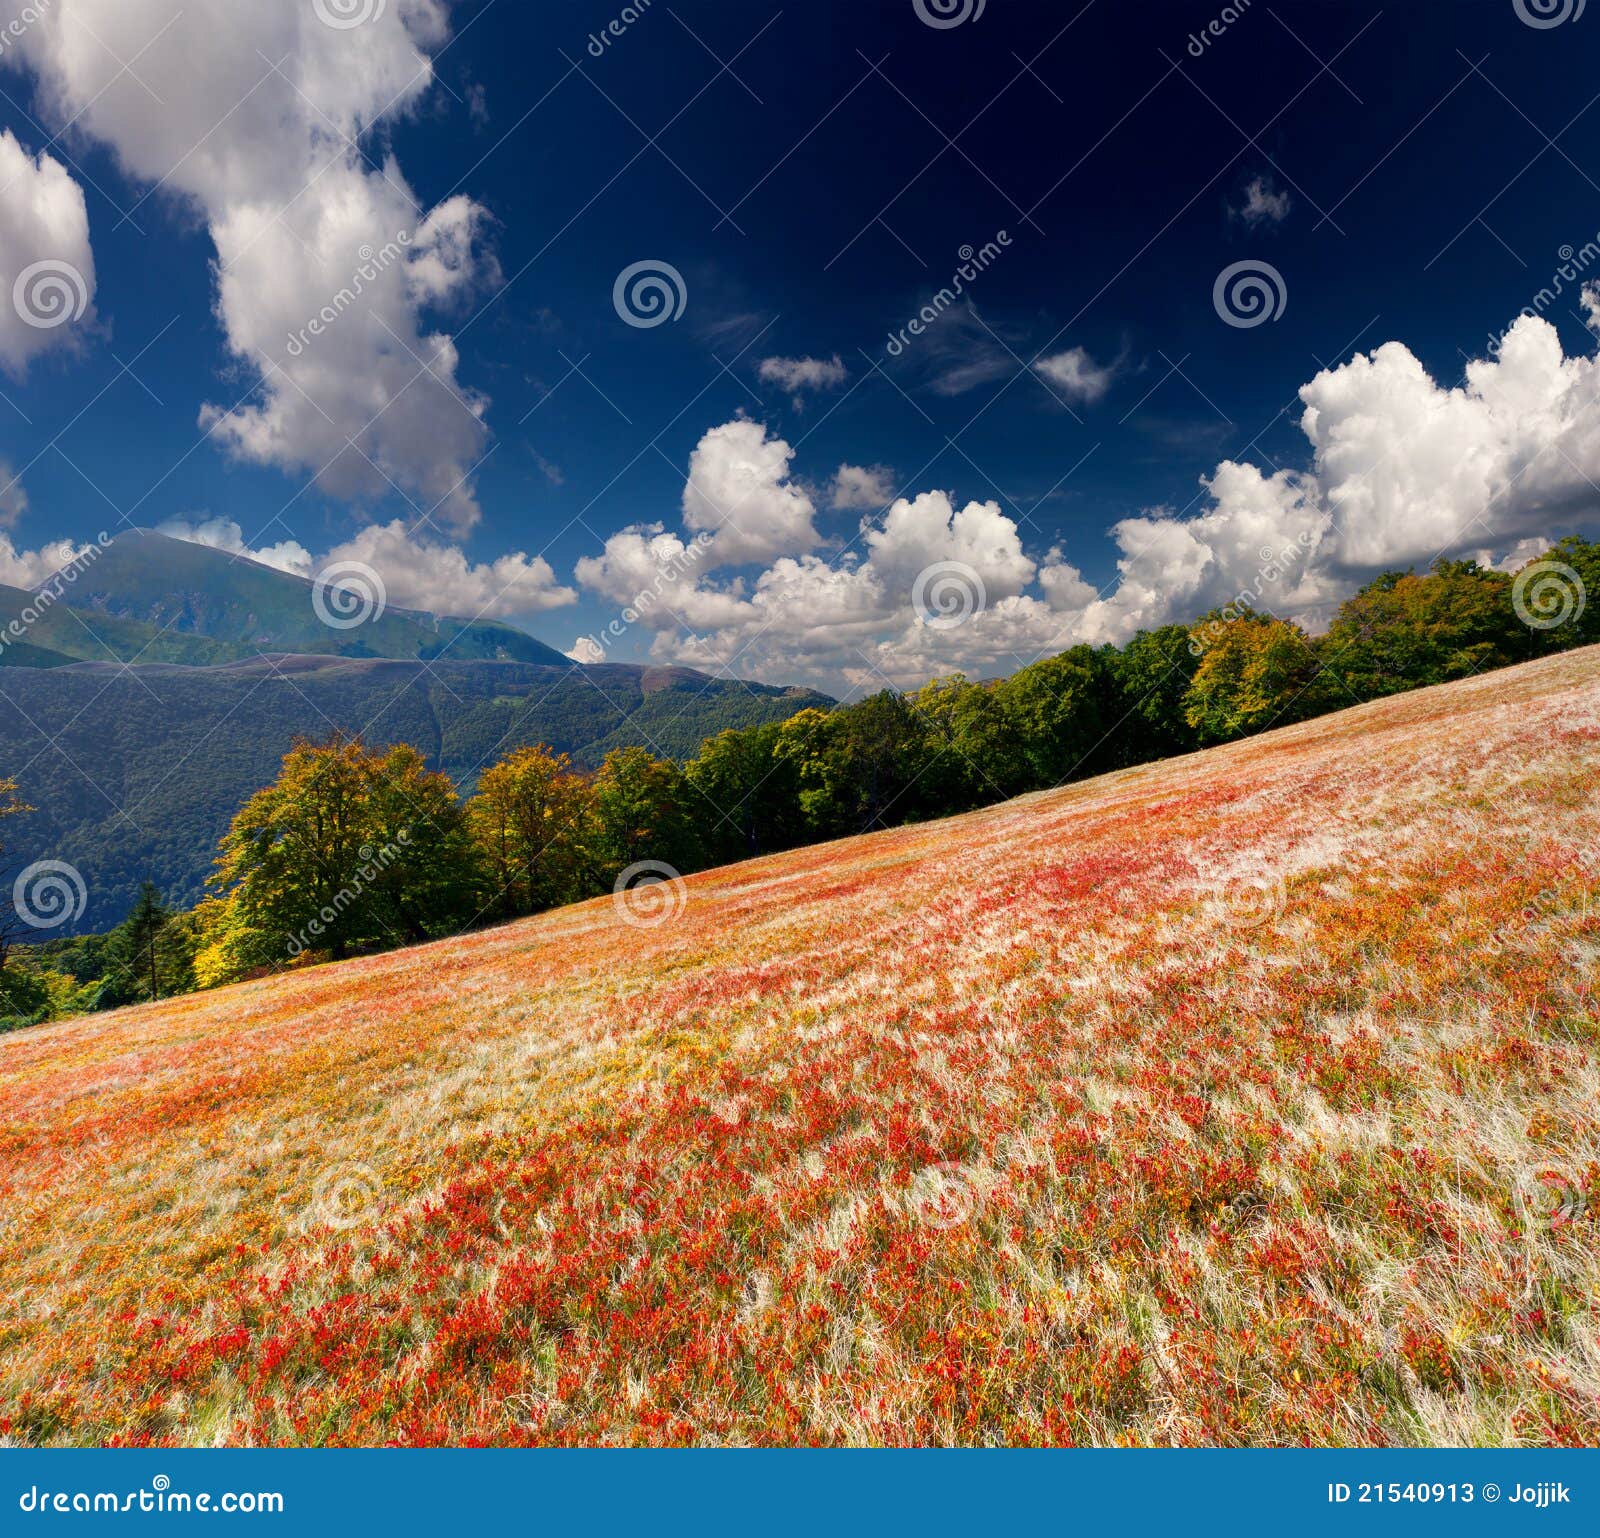 Colorful Autumn Landscape Stock Image Image Of Light 21540913